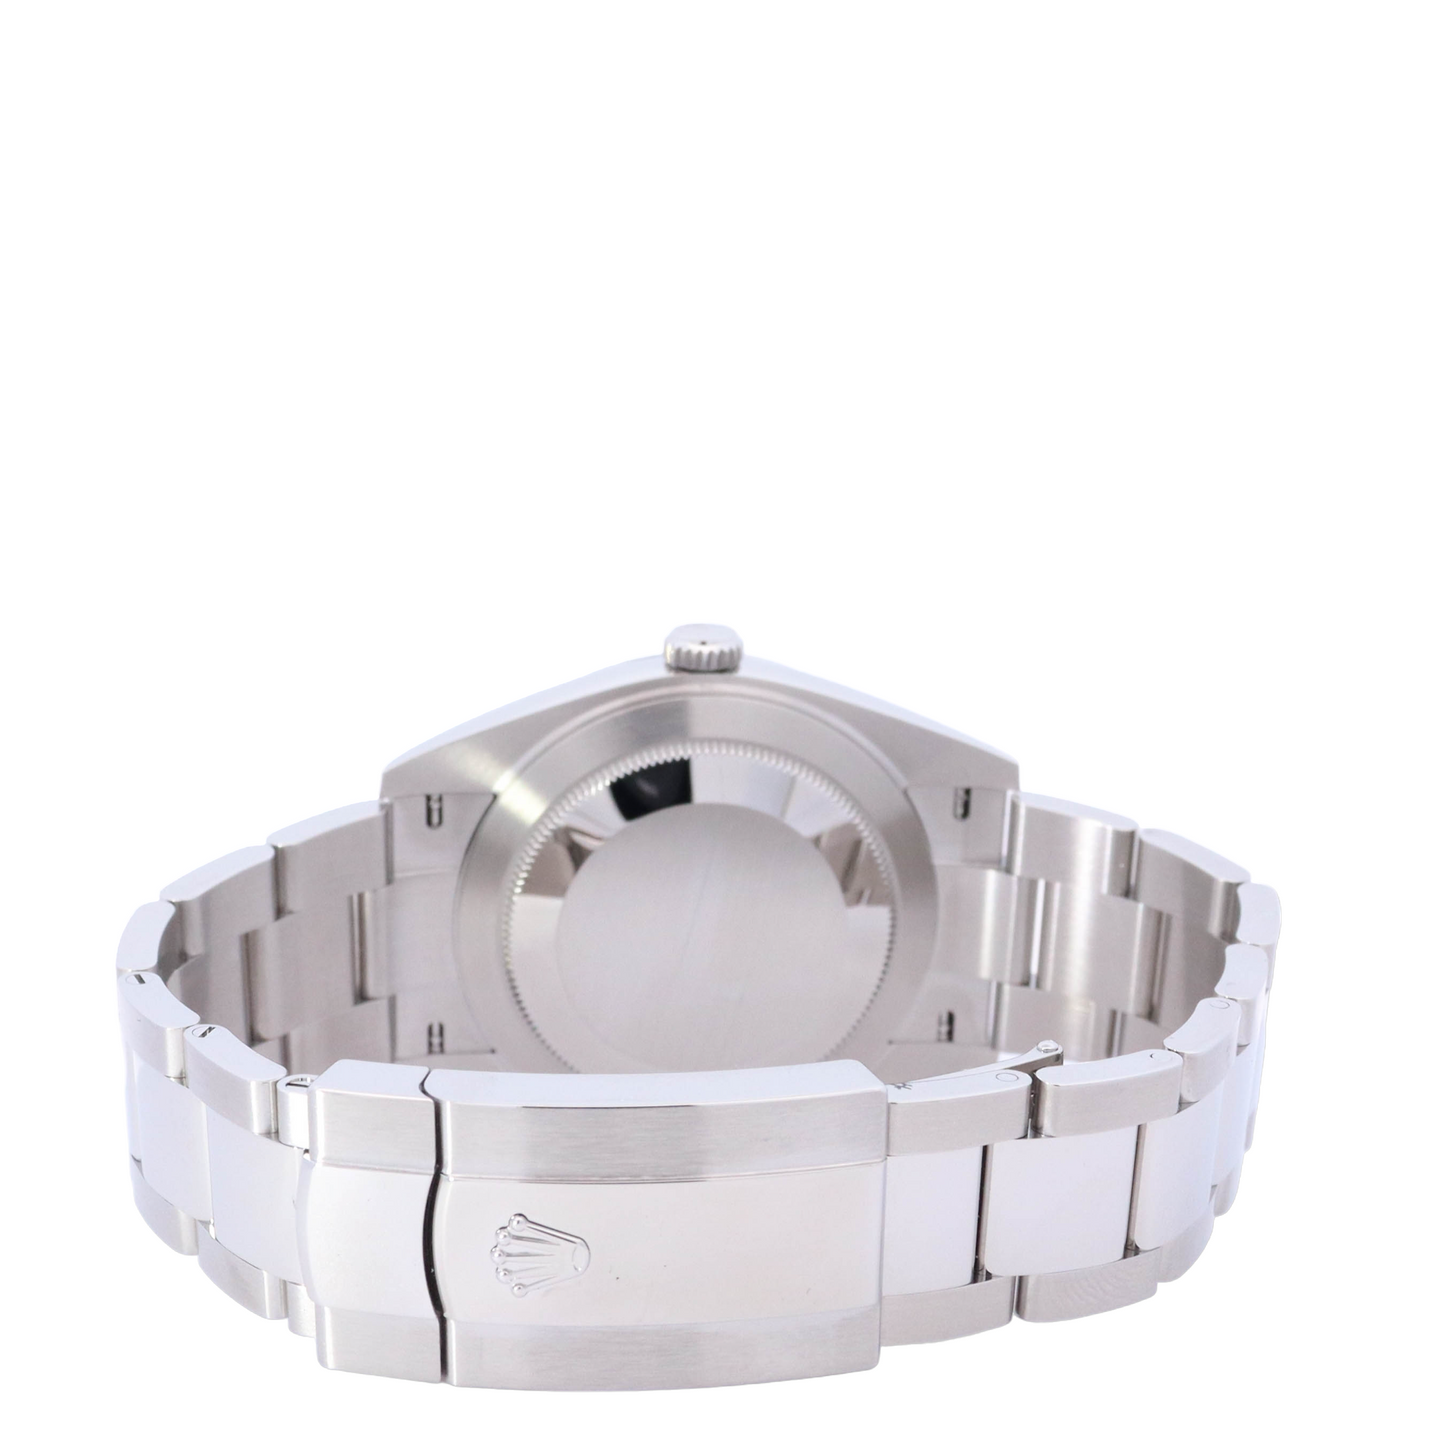 Rolex Datejust 41mm Stainless Steel White Stick Dial Watch Reference# 126300 - Happy Jewelers Fine Jewelry Lifetime Warranty